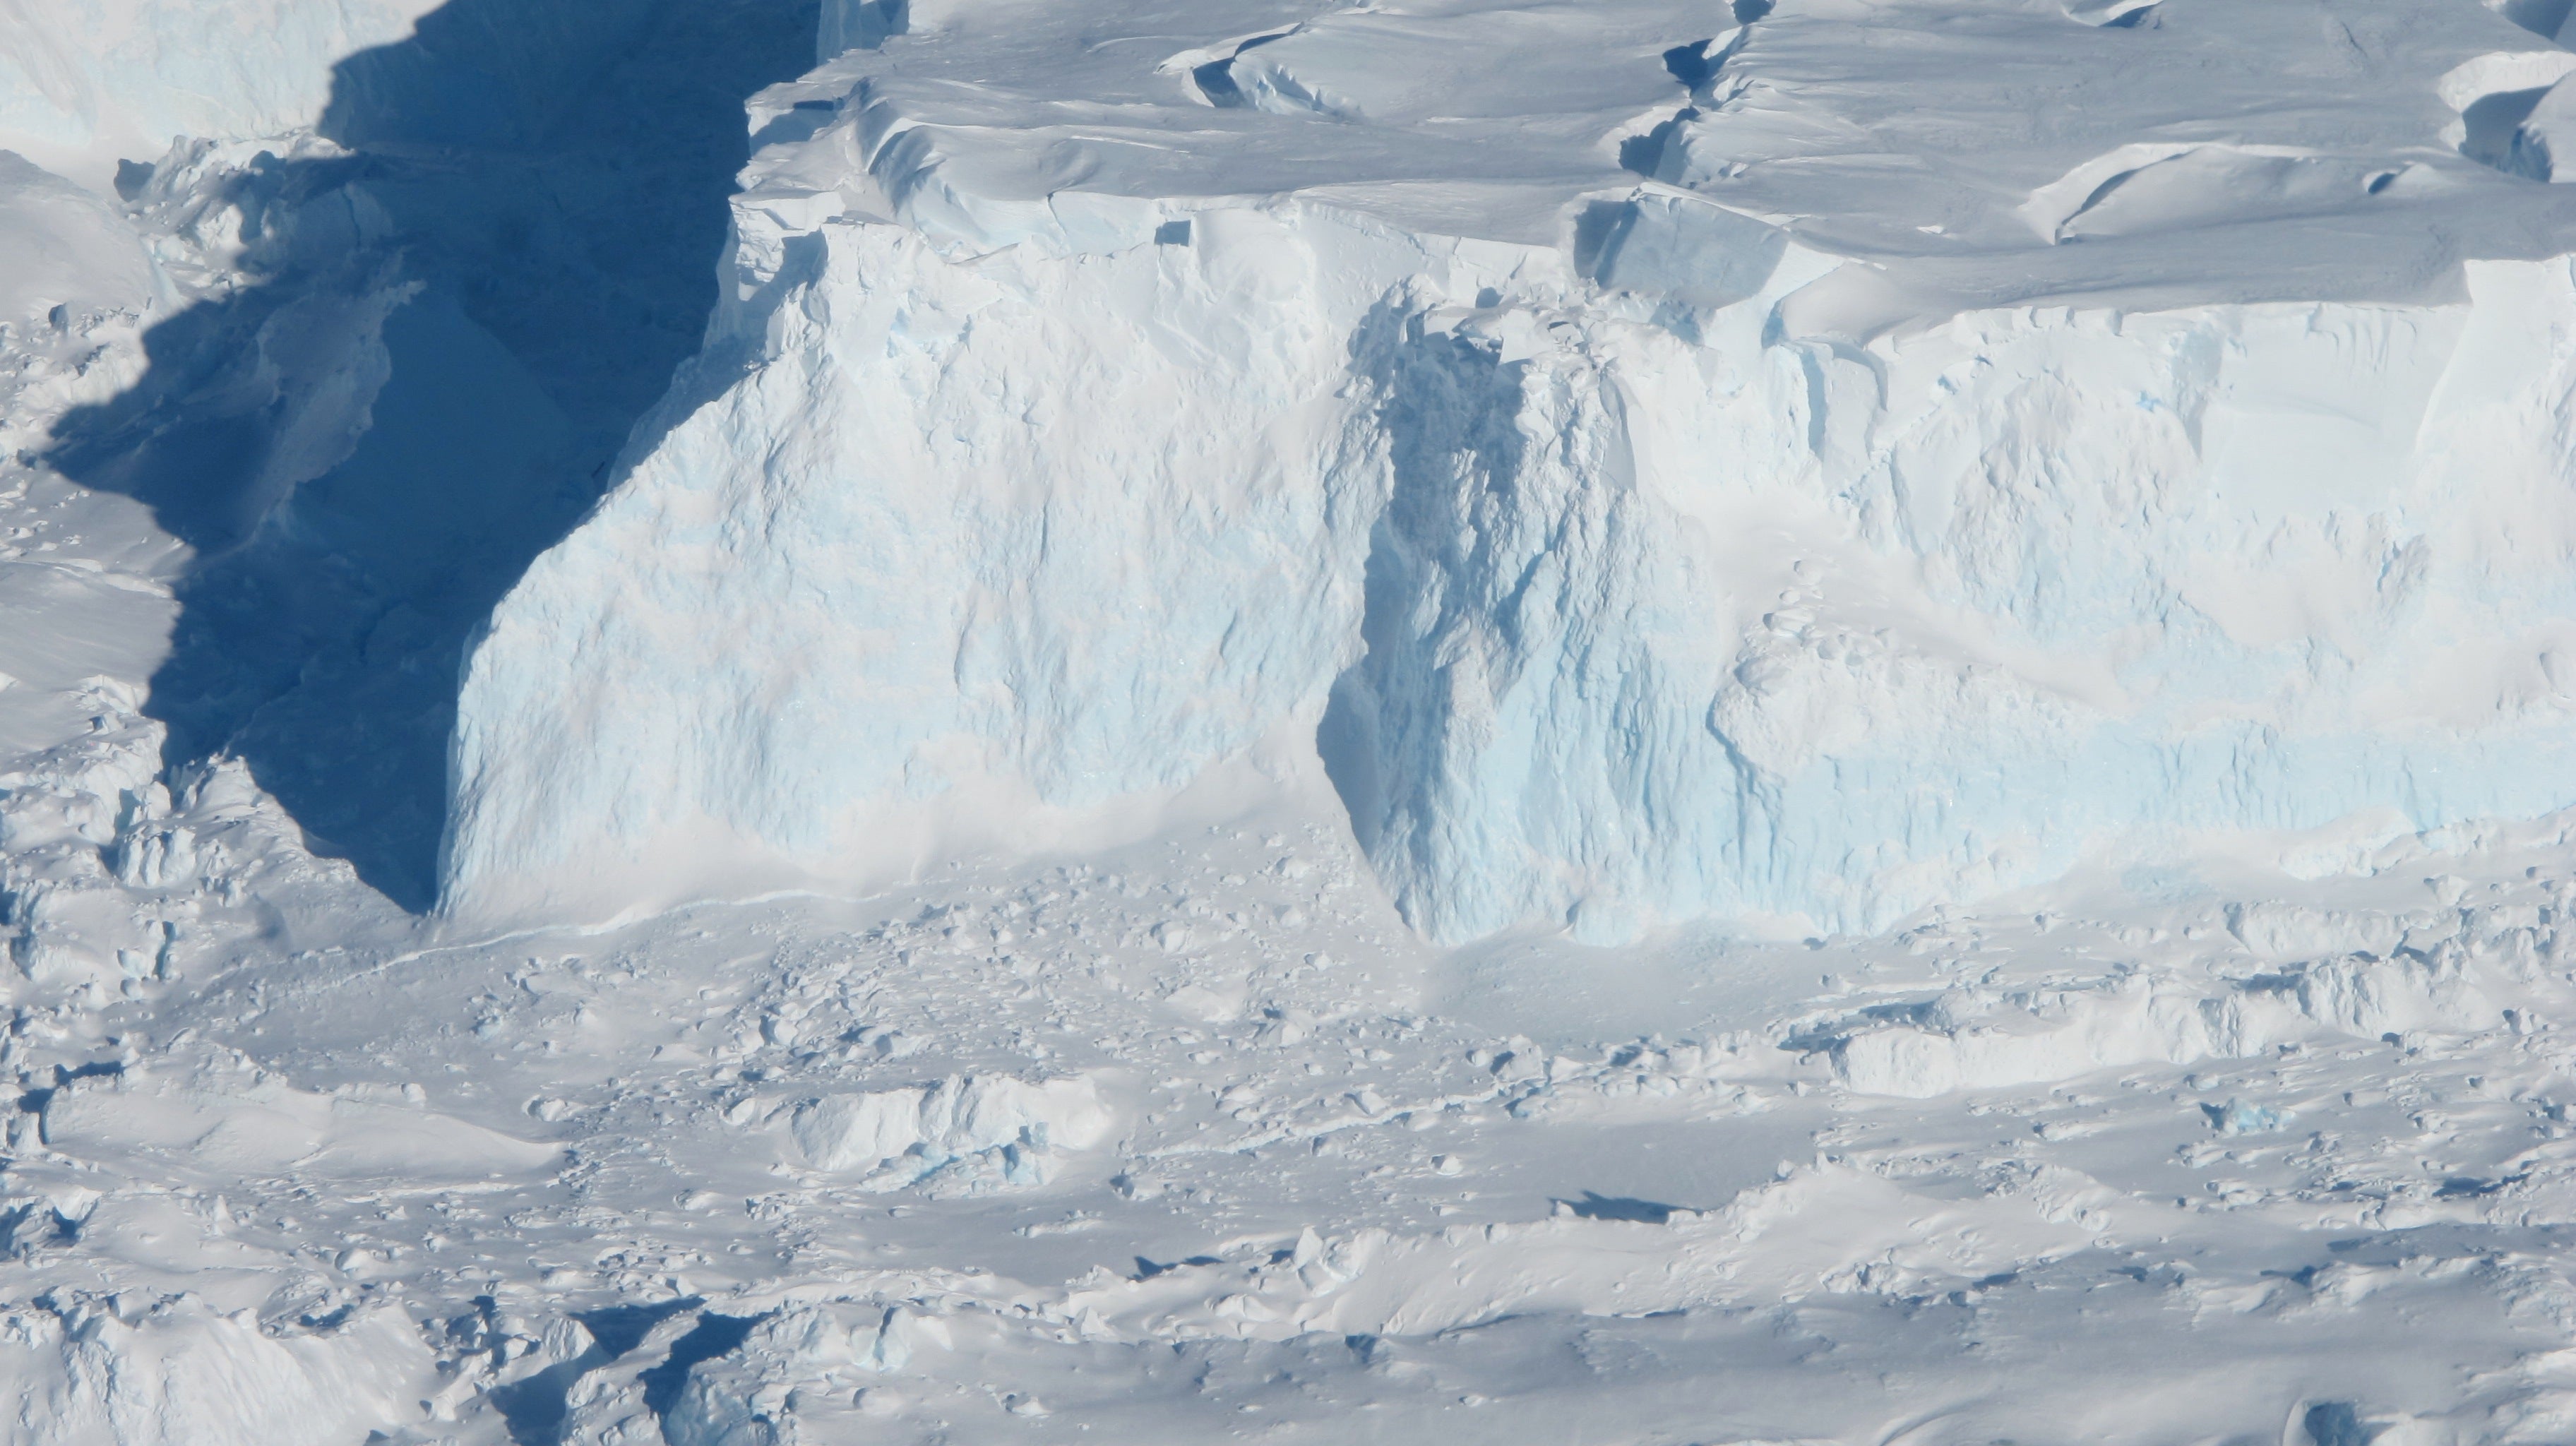 Troubling Signs of Key Antarctic Glacier Retreat Emerge